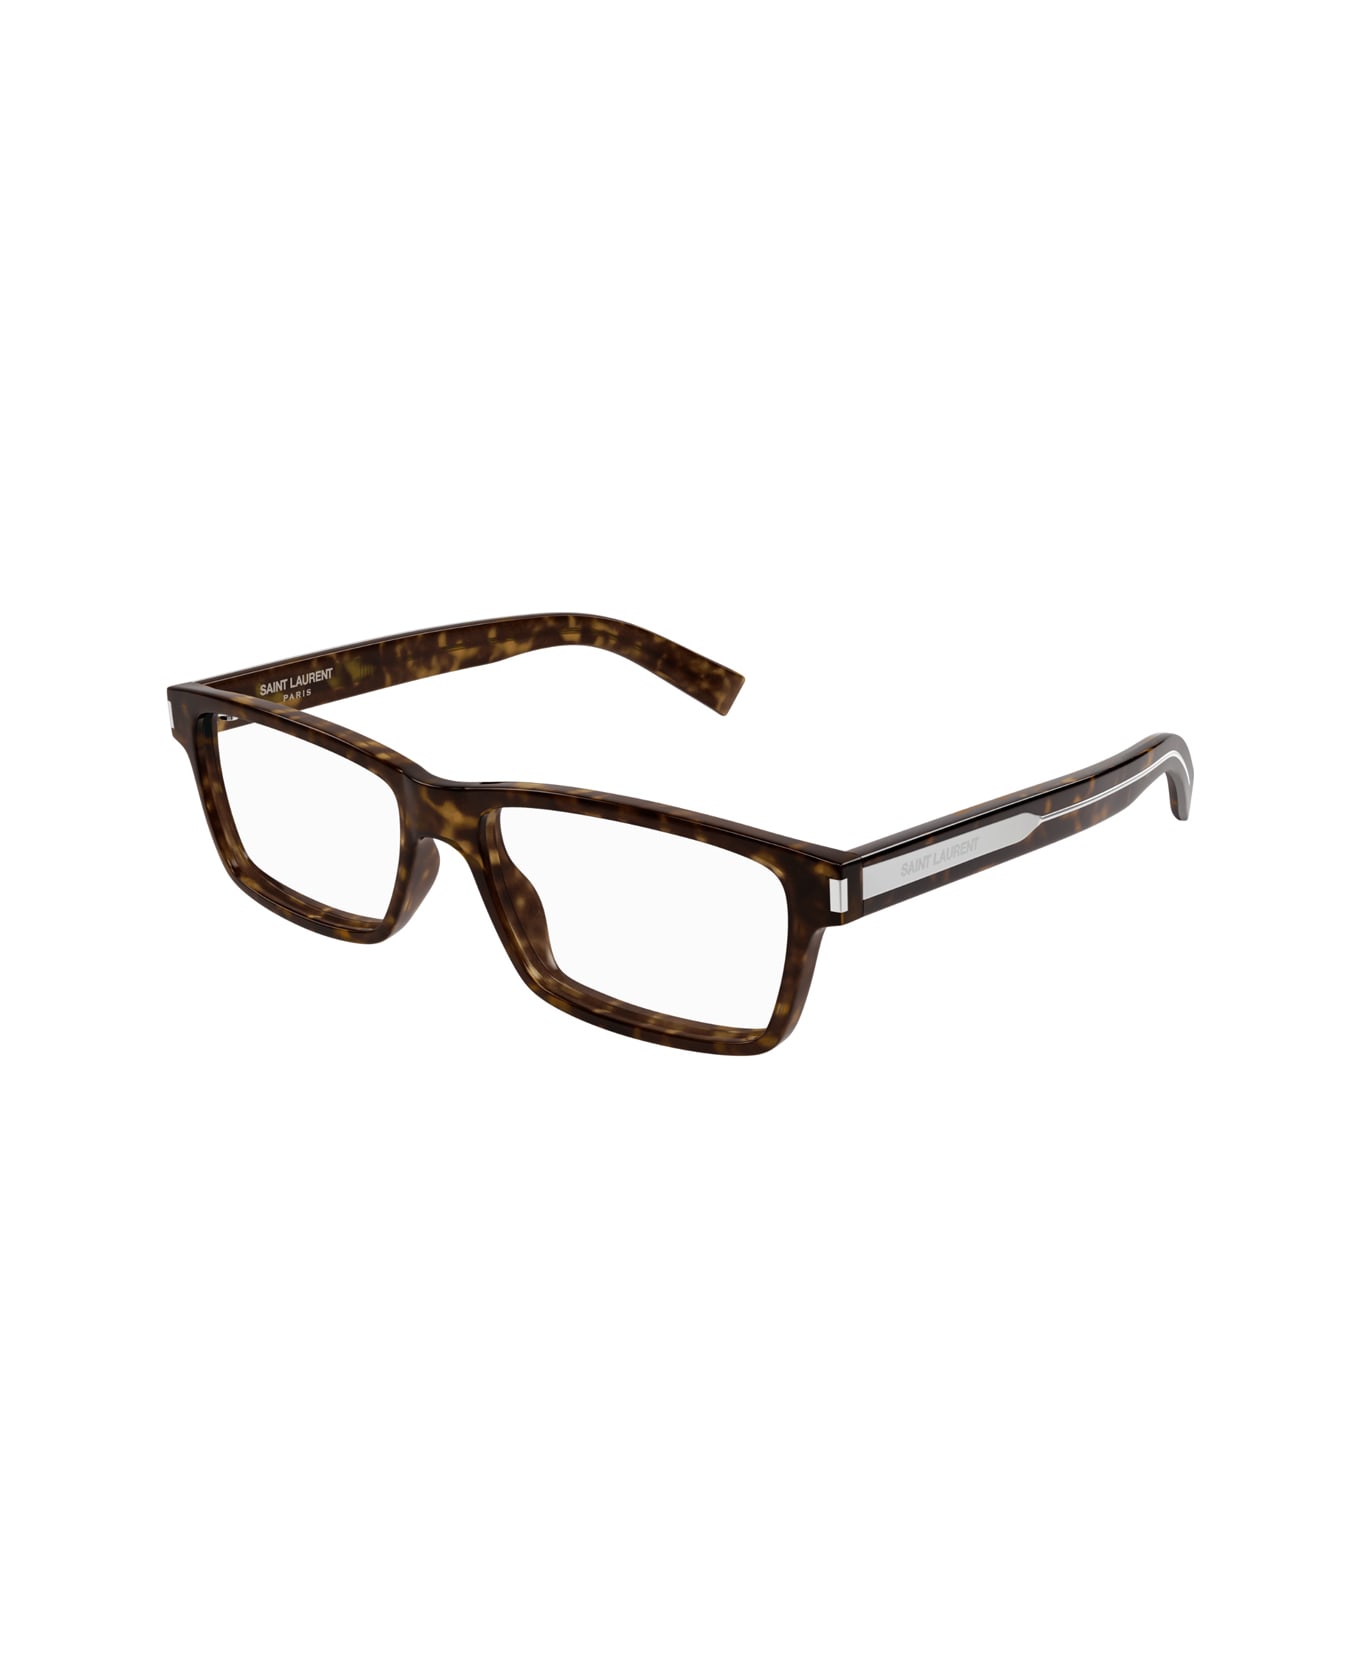 Saint Laurent Eyewear Sl 622 002 Glasses - Marrone アイウェア